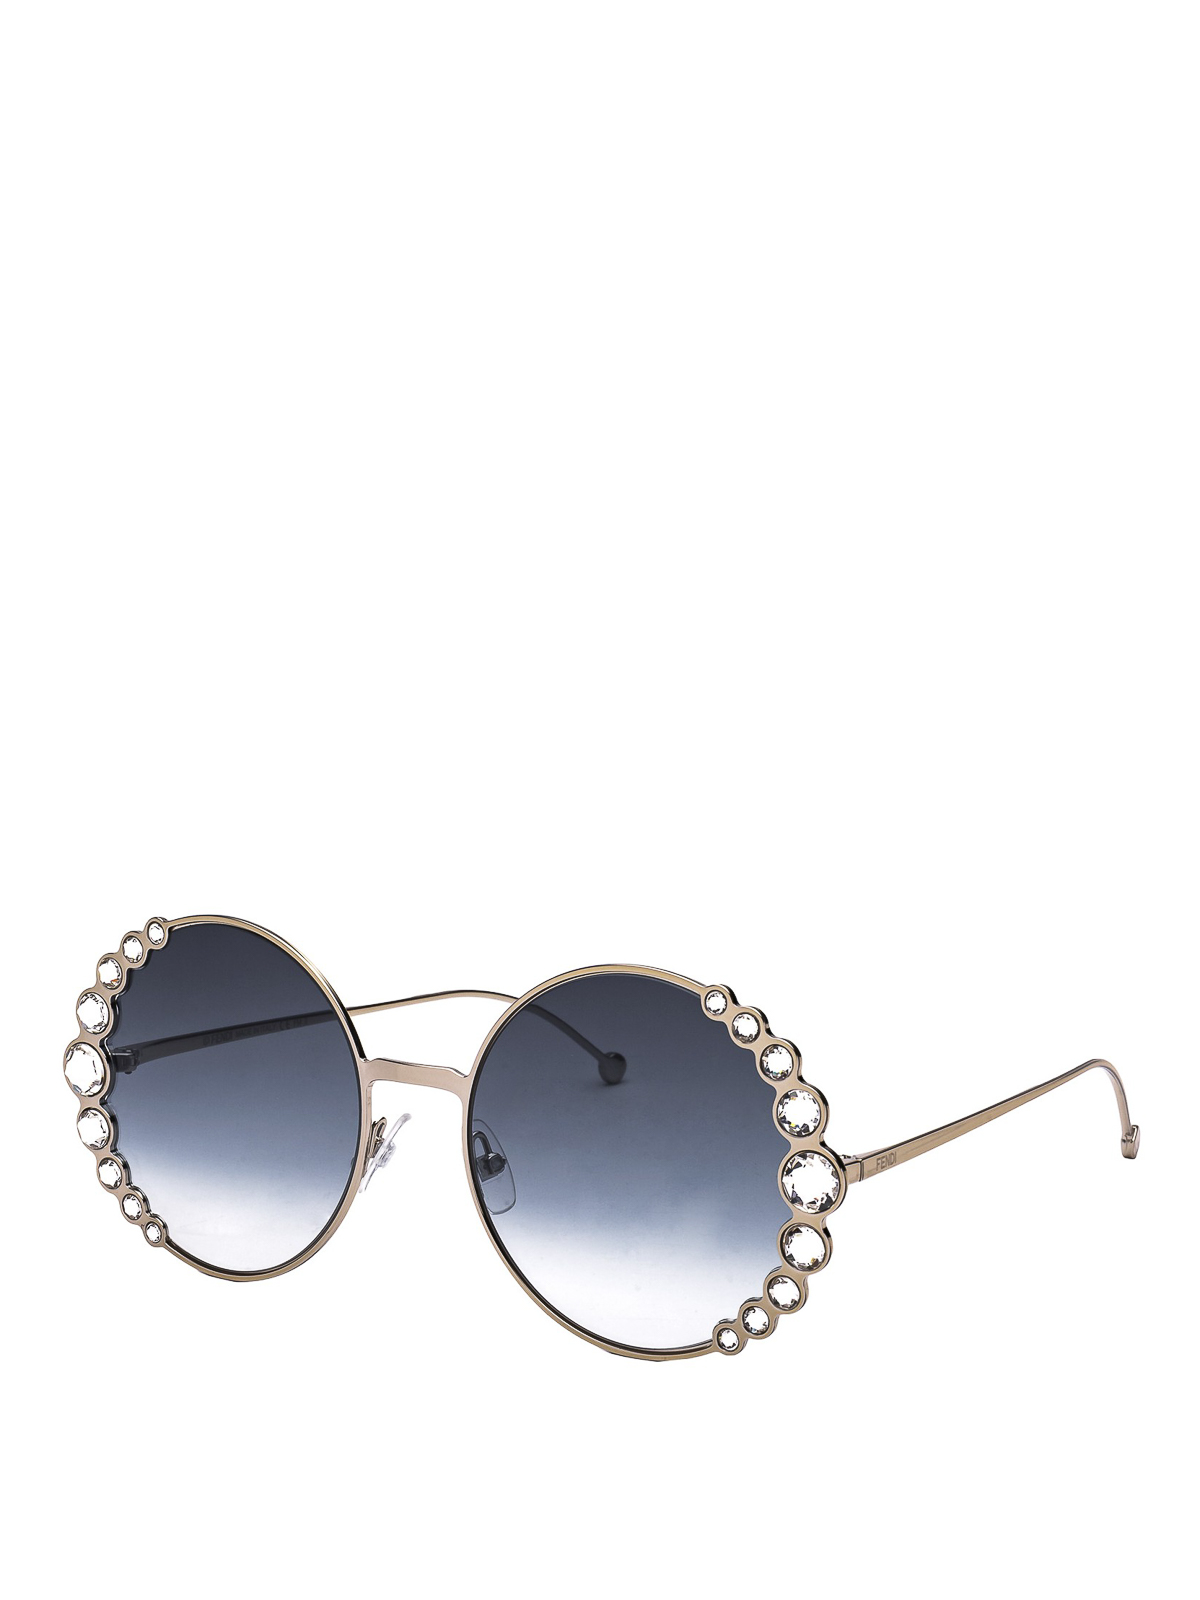 Shades Sunglasses Precious Pearl Black Faded Sunglasses